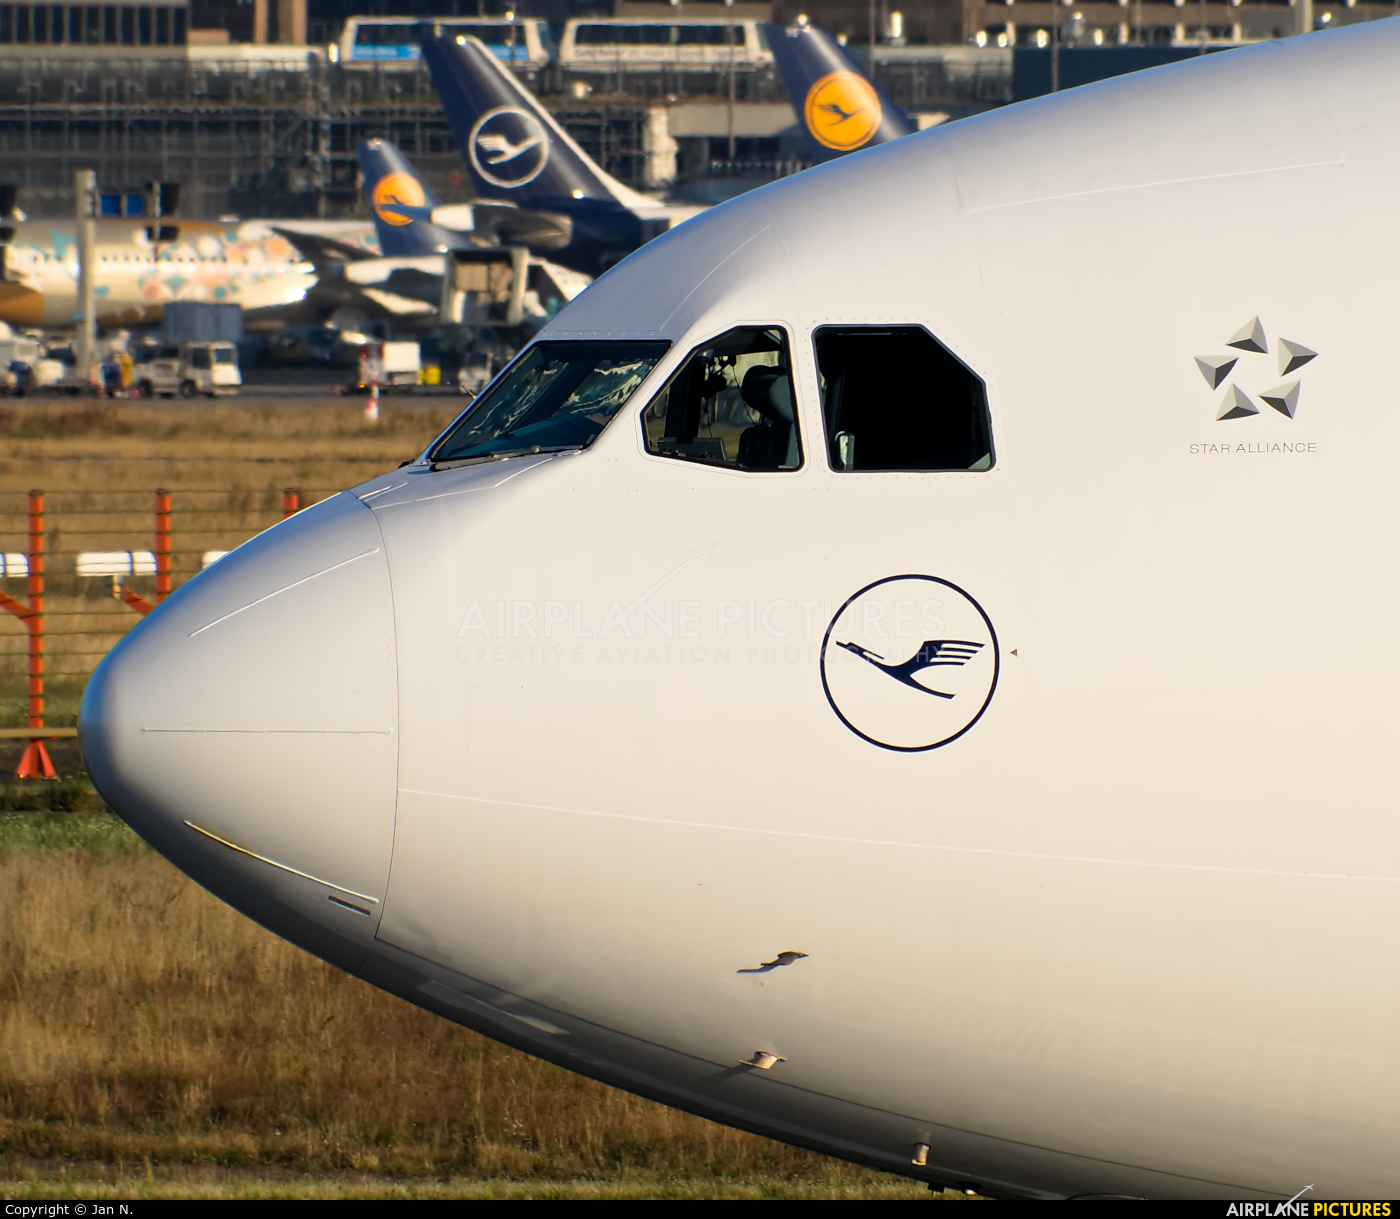 Lufthansa D-AIKO aircraft at Frankfurt